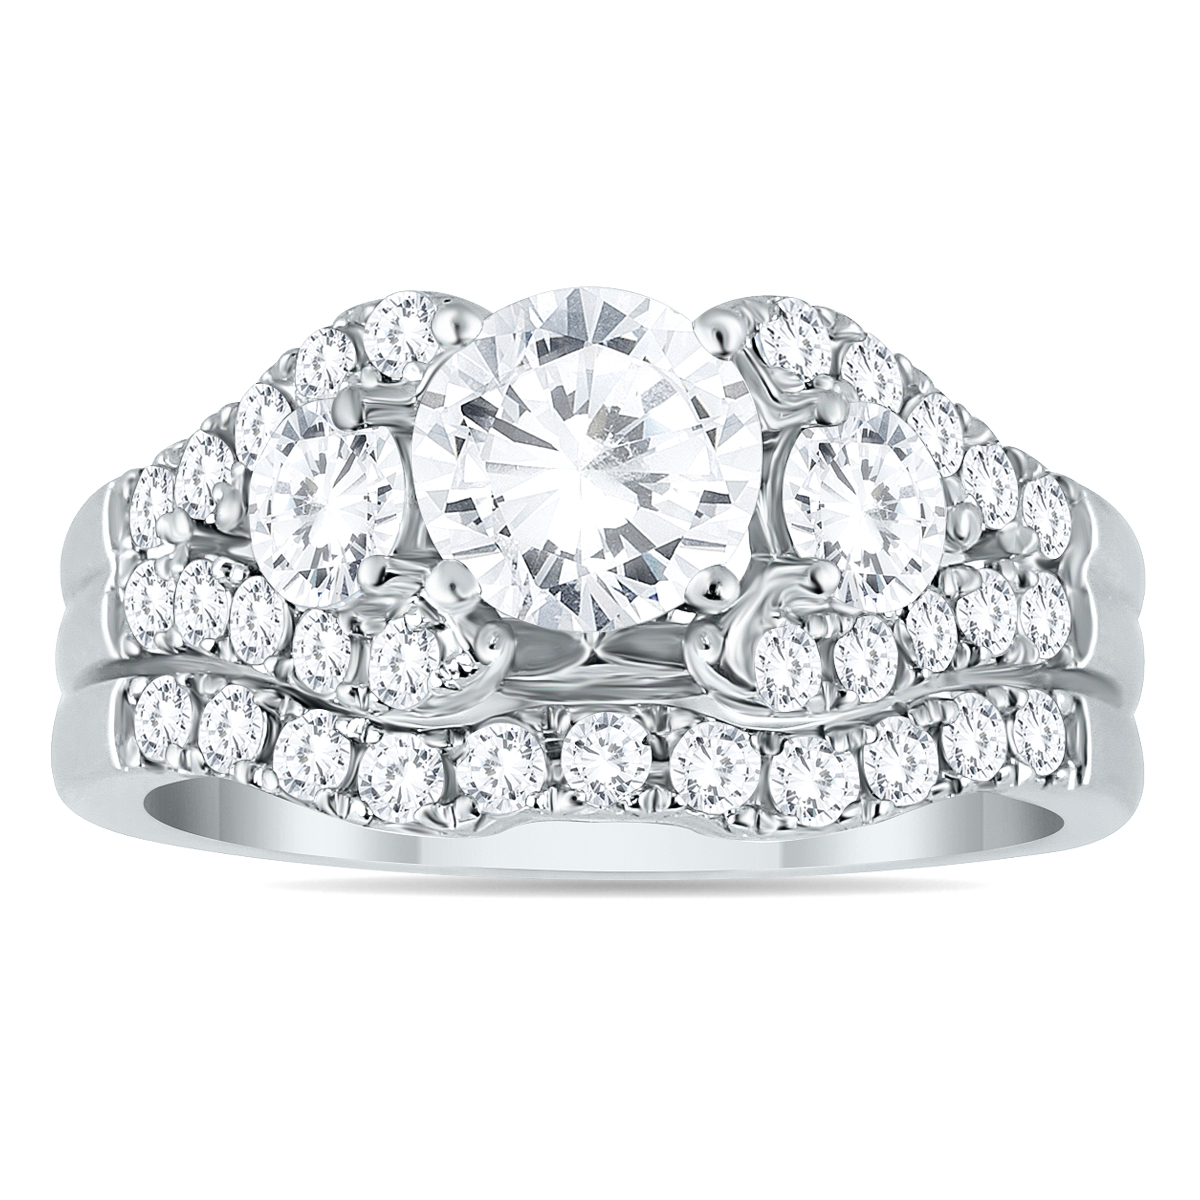 szul.com AGS Certified 2 1/5 Carat Diamond Bridal Set in 14K White Gold (H-I Color, I1-I2 Clarity)